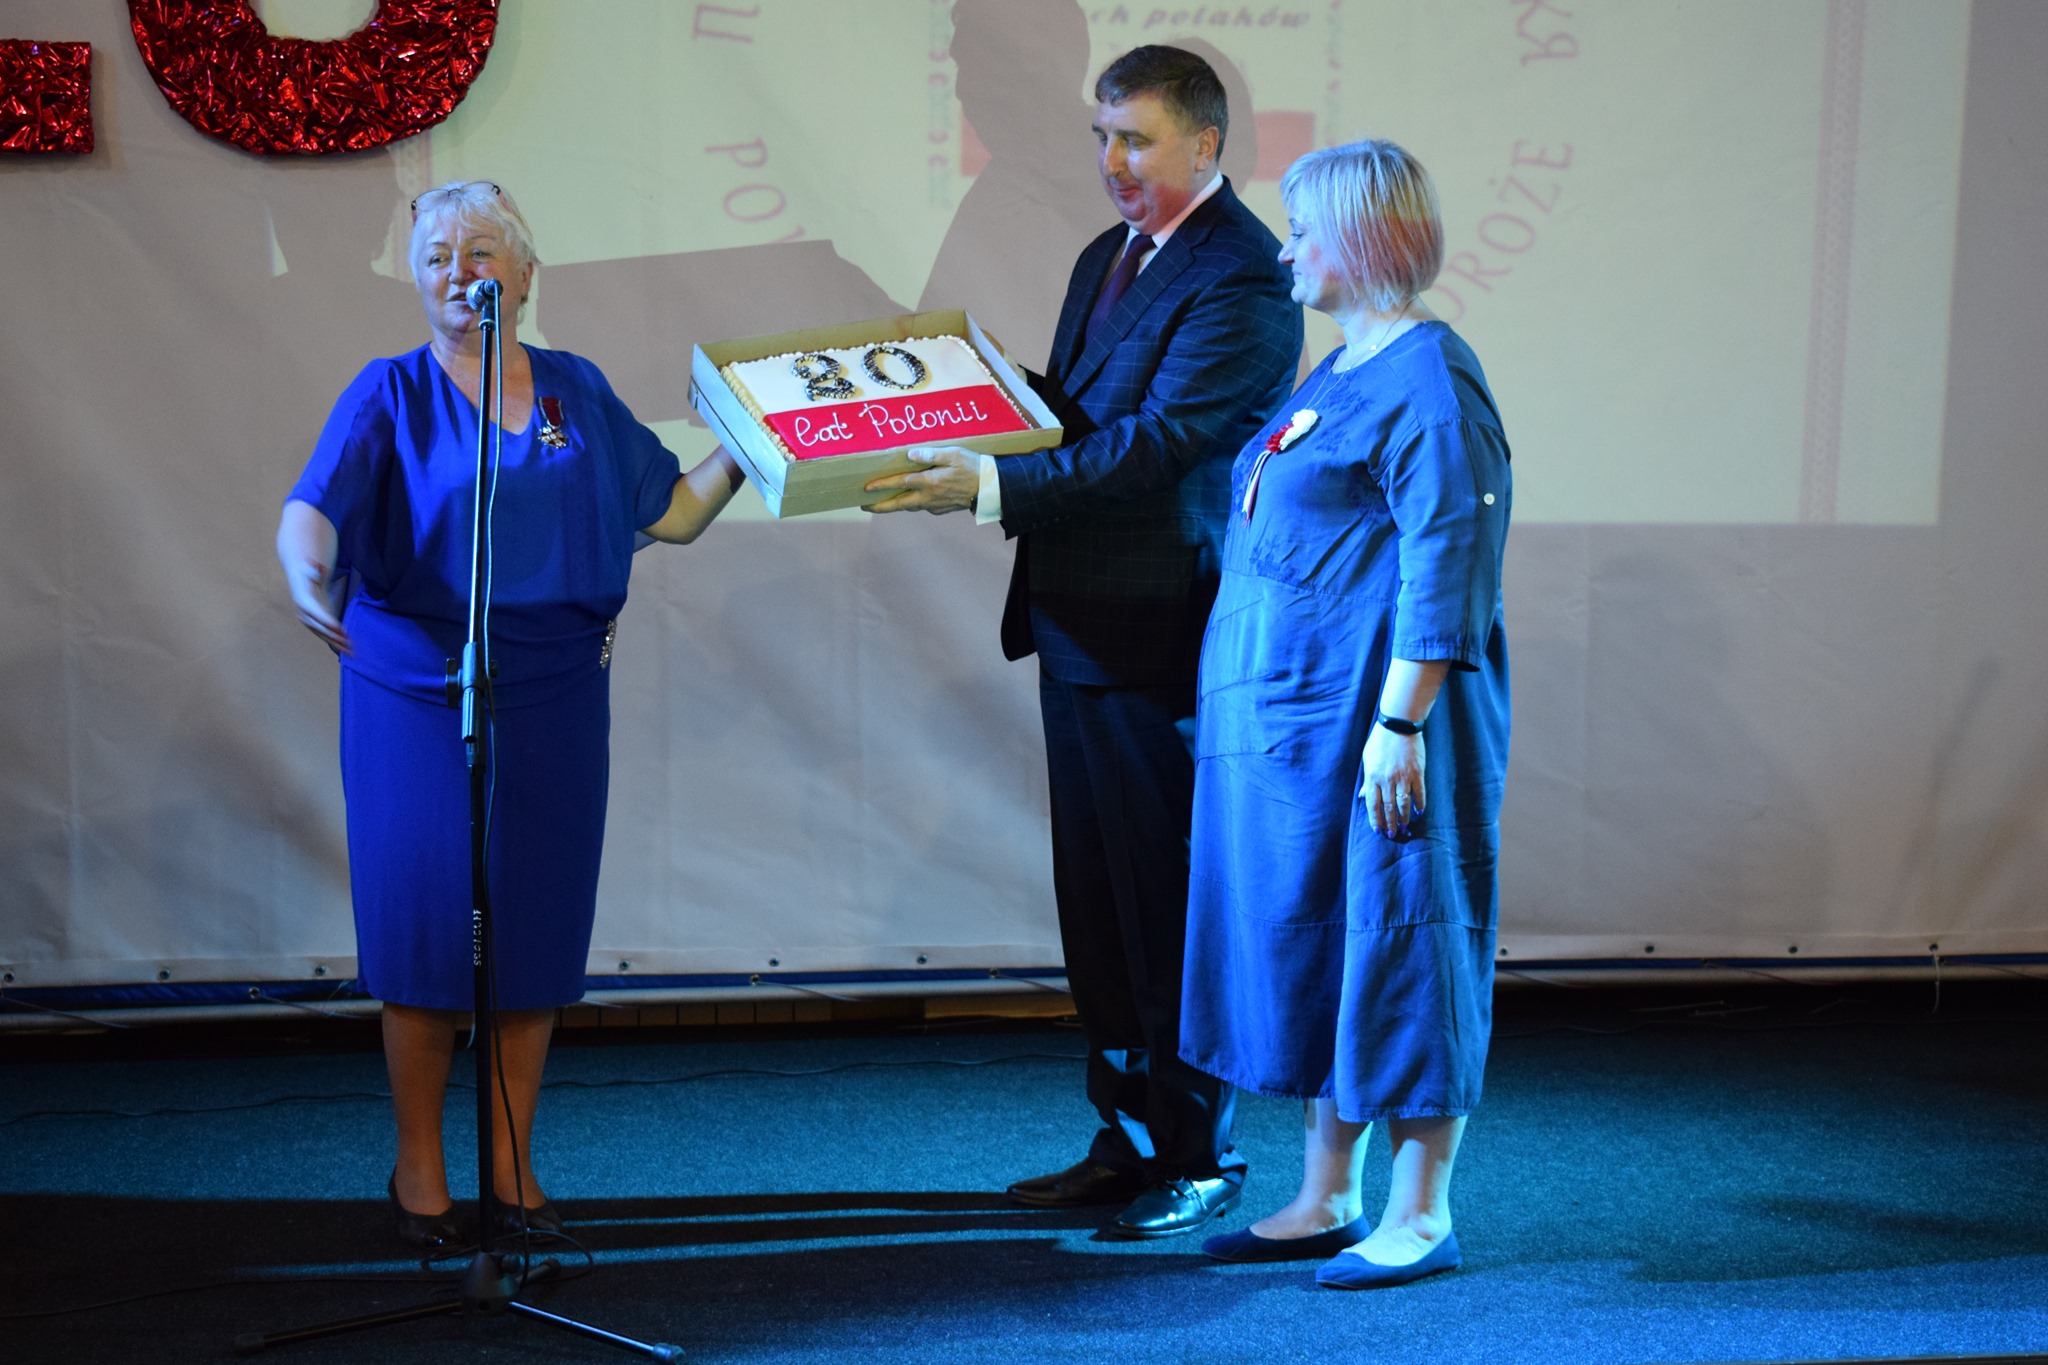 Празднование 20-летия СДР "Полония"